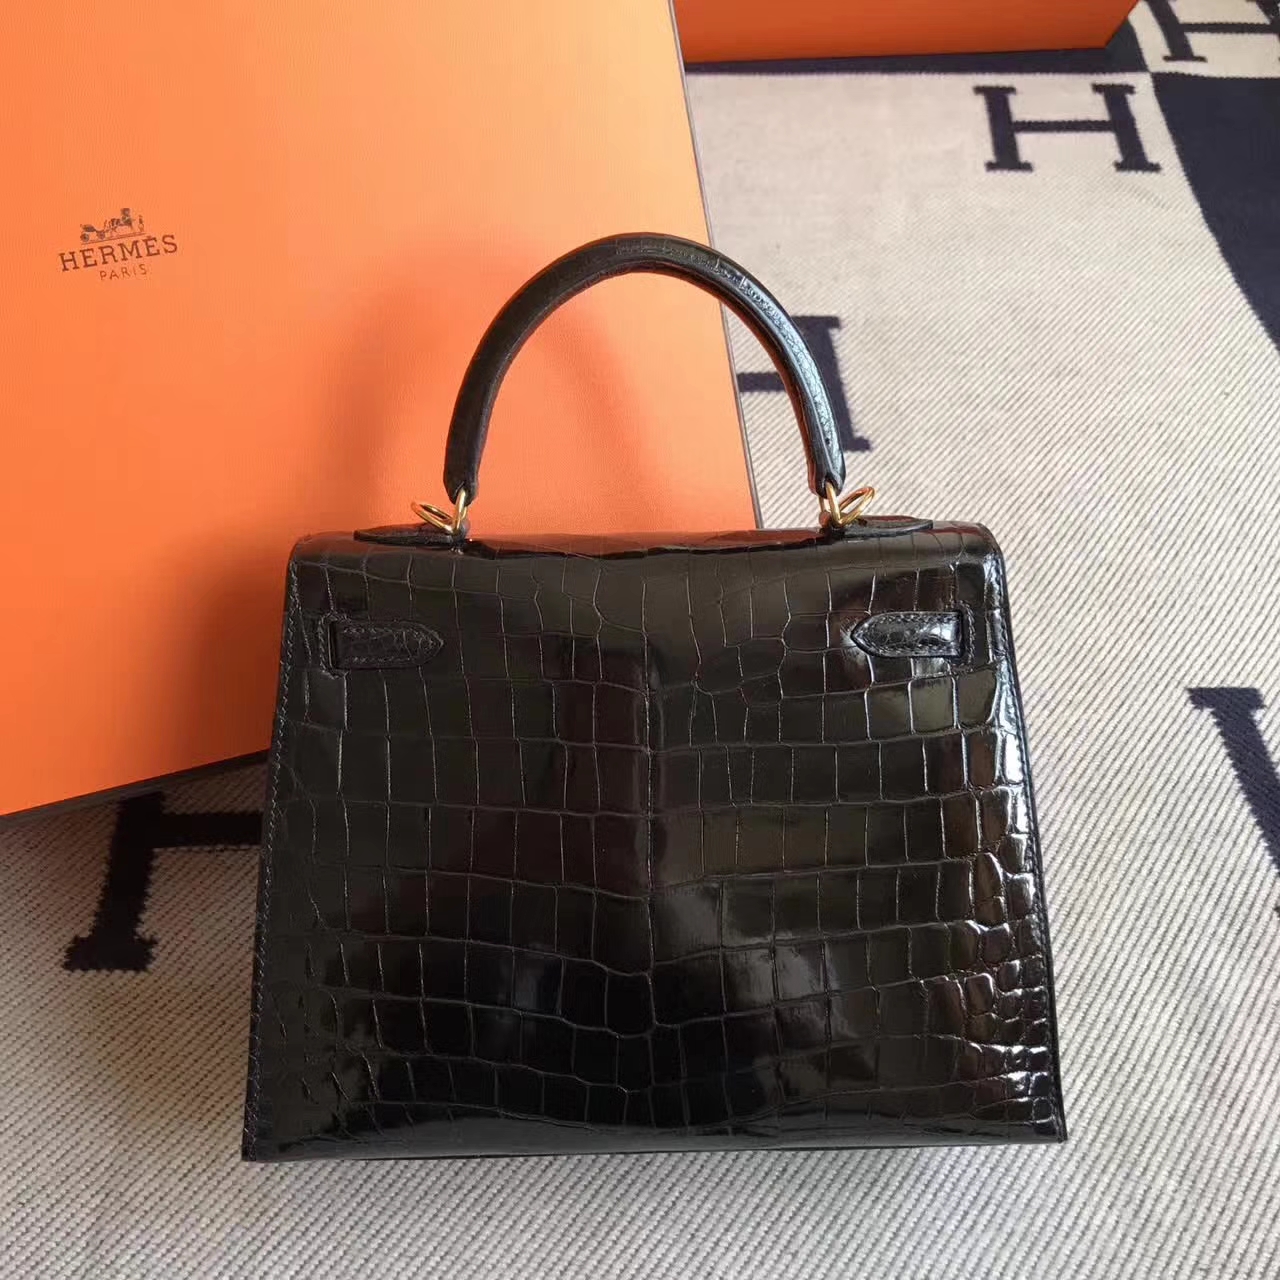 Discount Hermes Kelly Bag25cm in CK89 Black Crocodile Shiny Leather